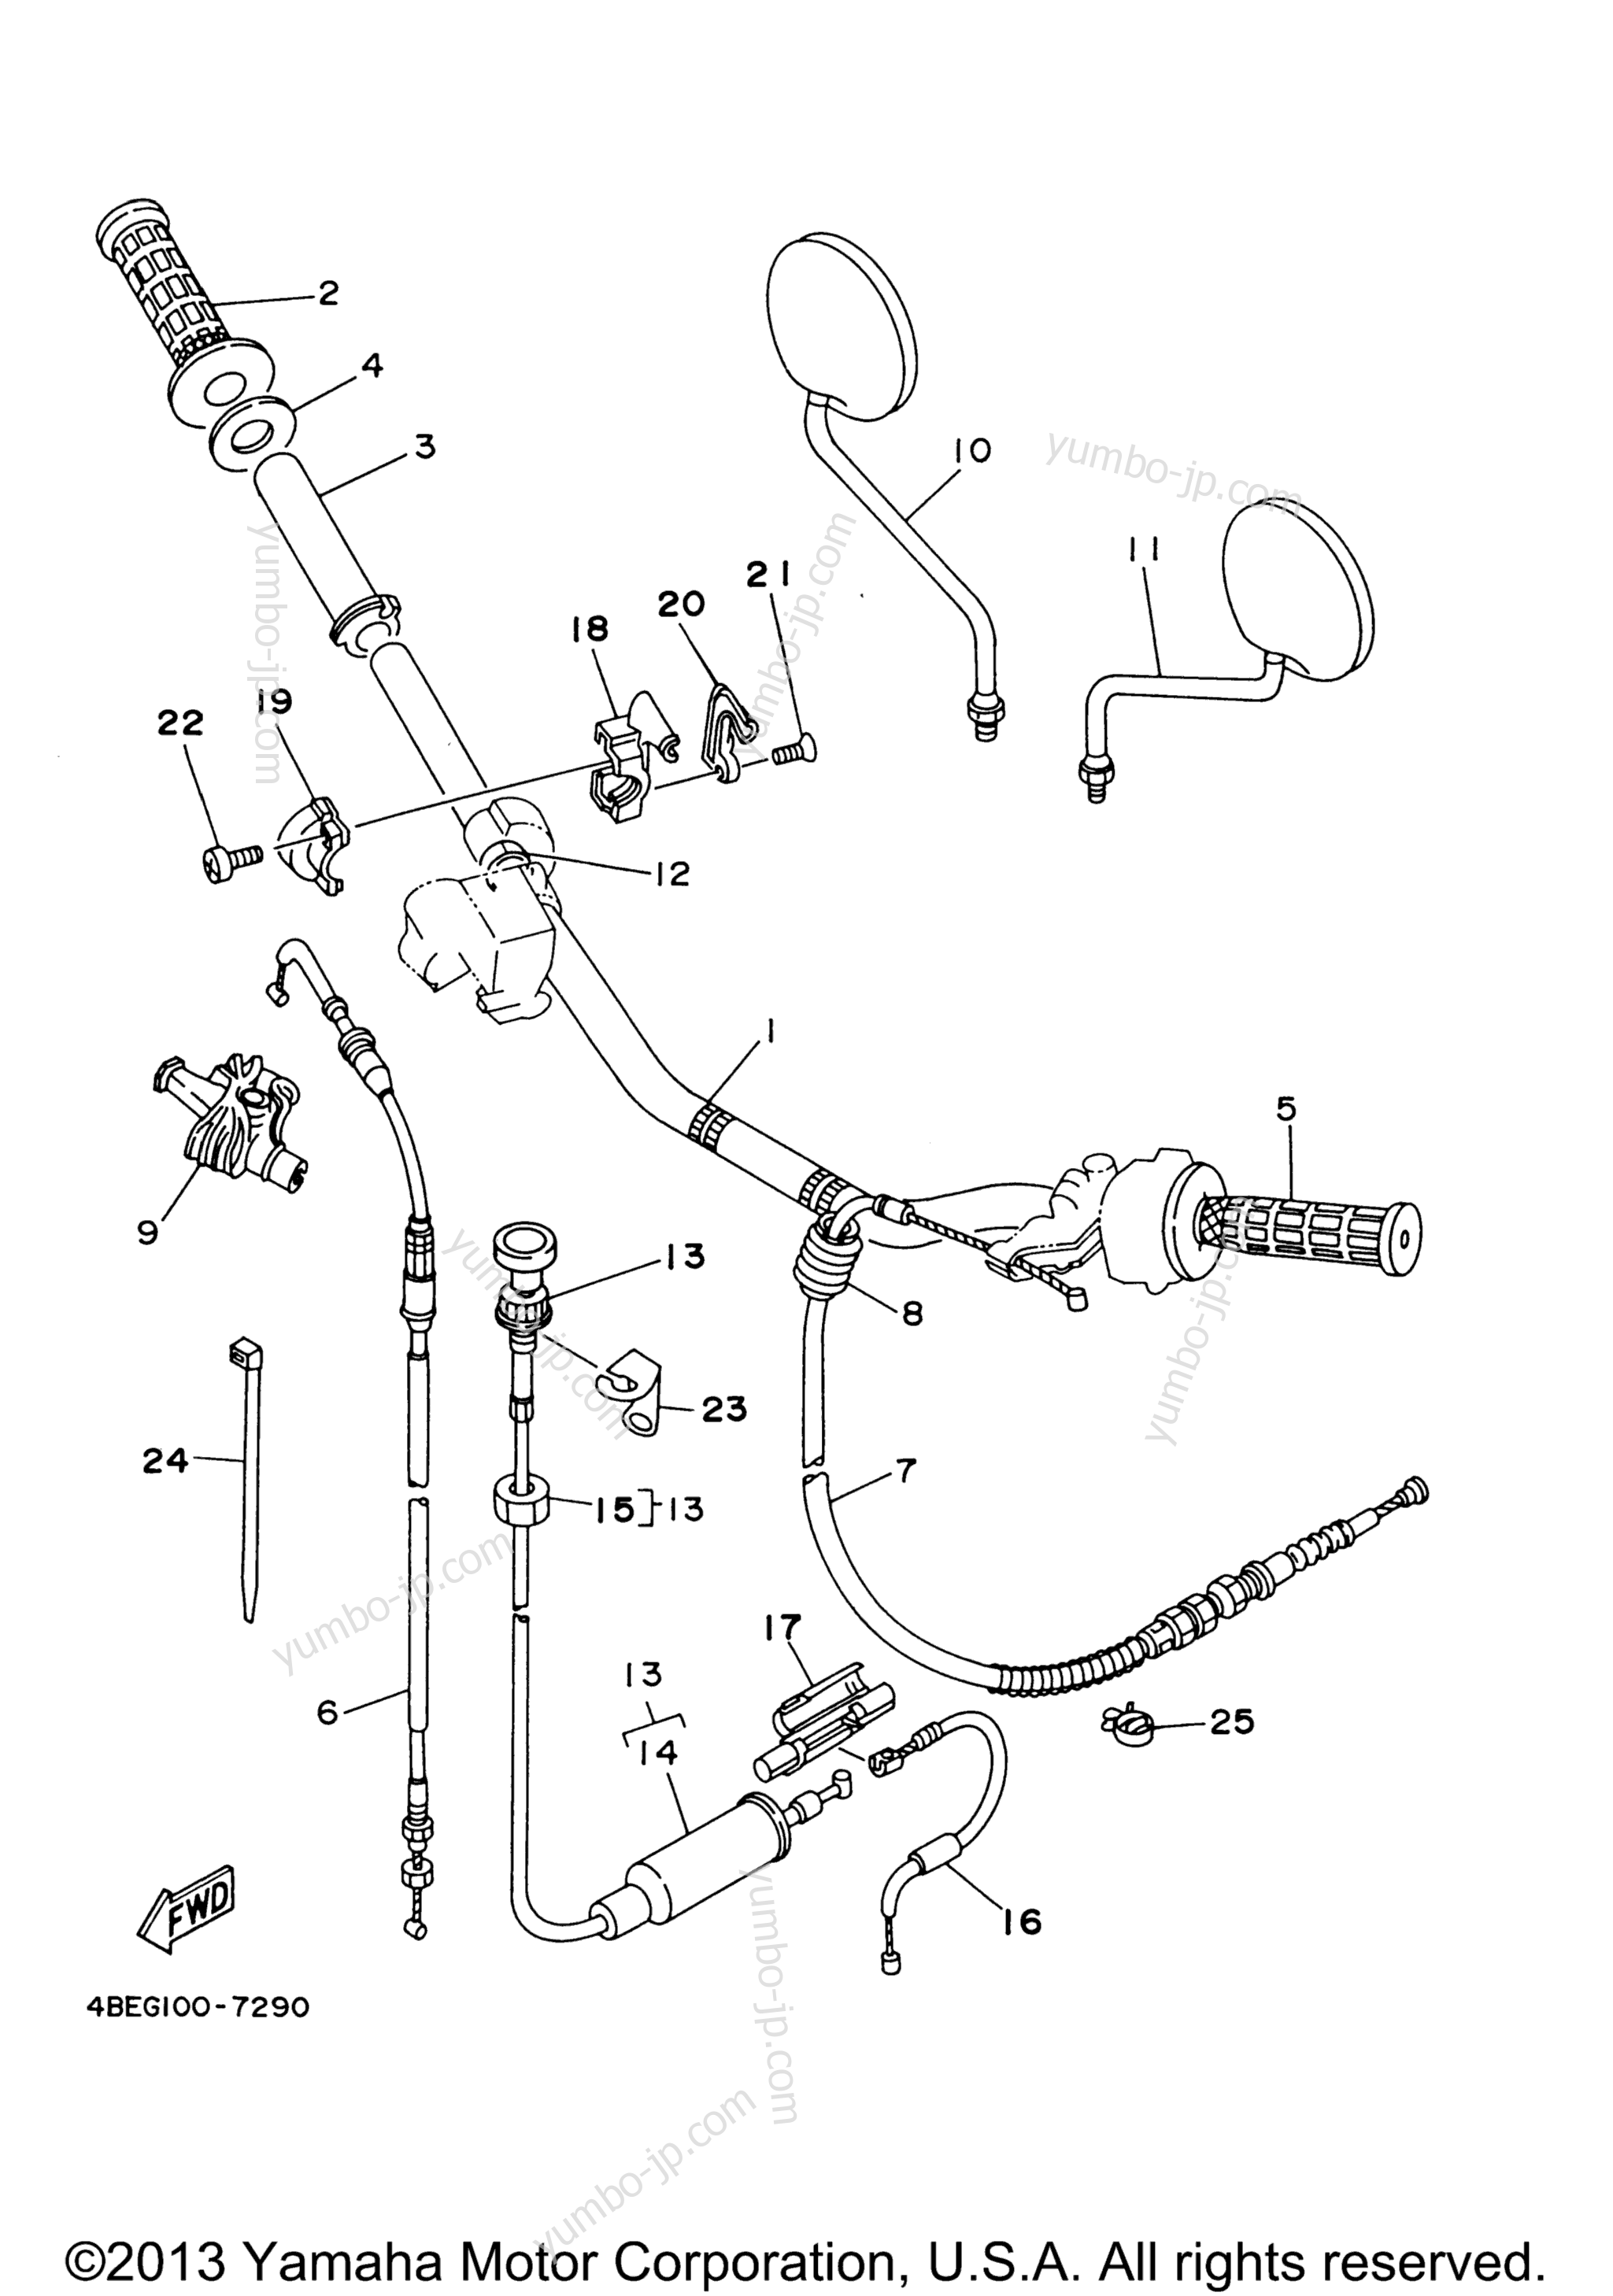 Steering Handle Cable for motorcycles YAMAHA SEROW (XT225MC) CA 2000 year